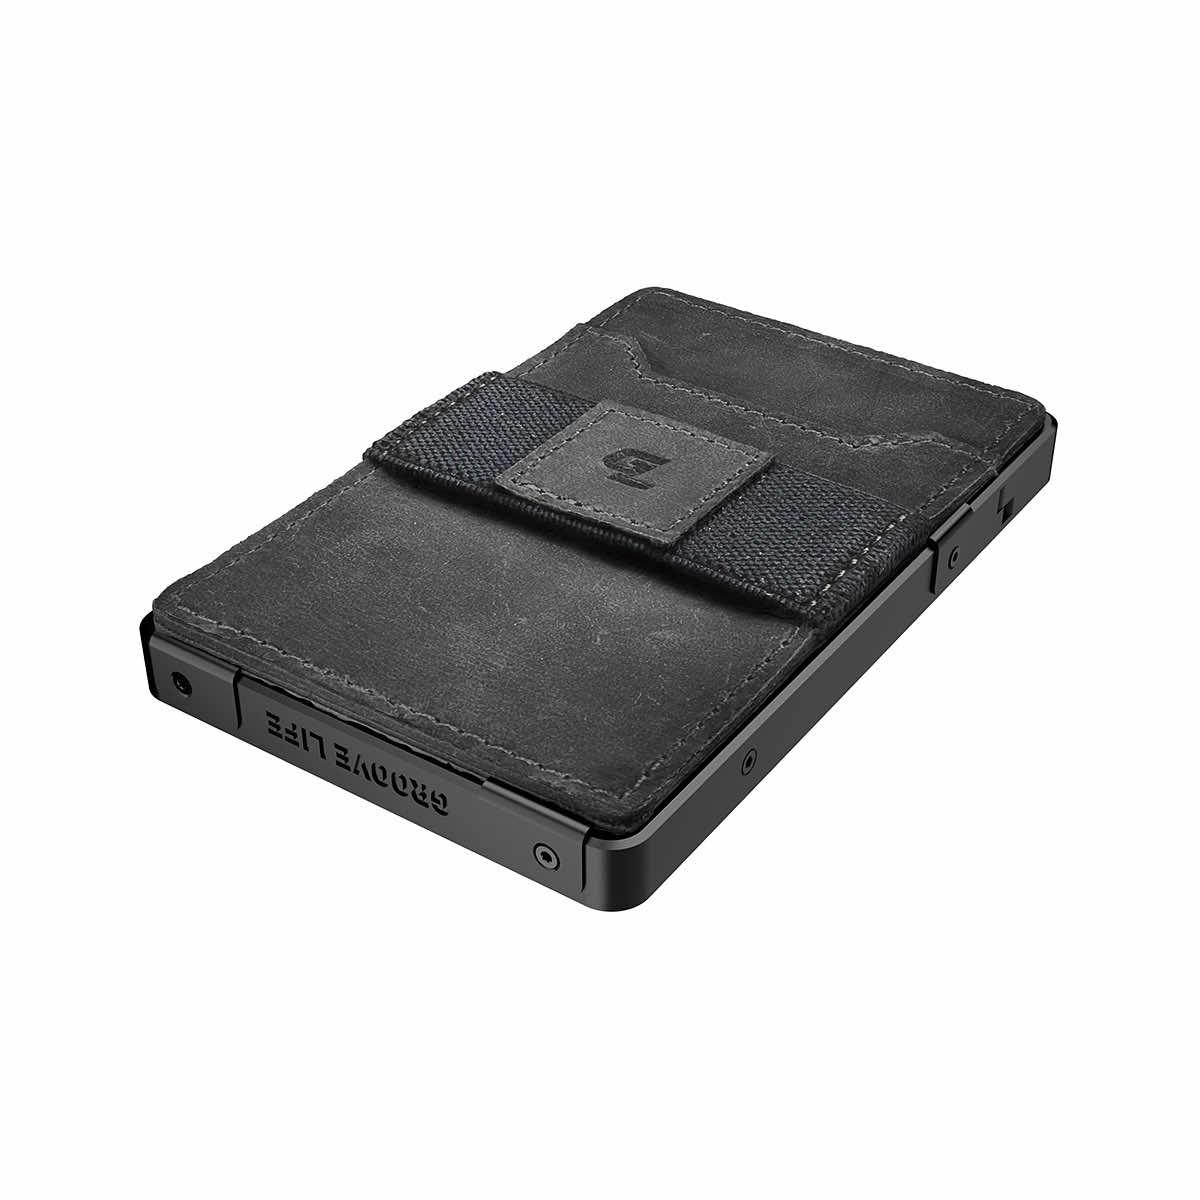  Black Leather Sleeve Groove Wallet